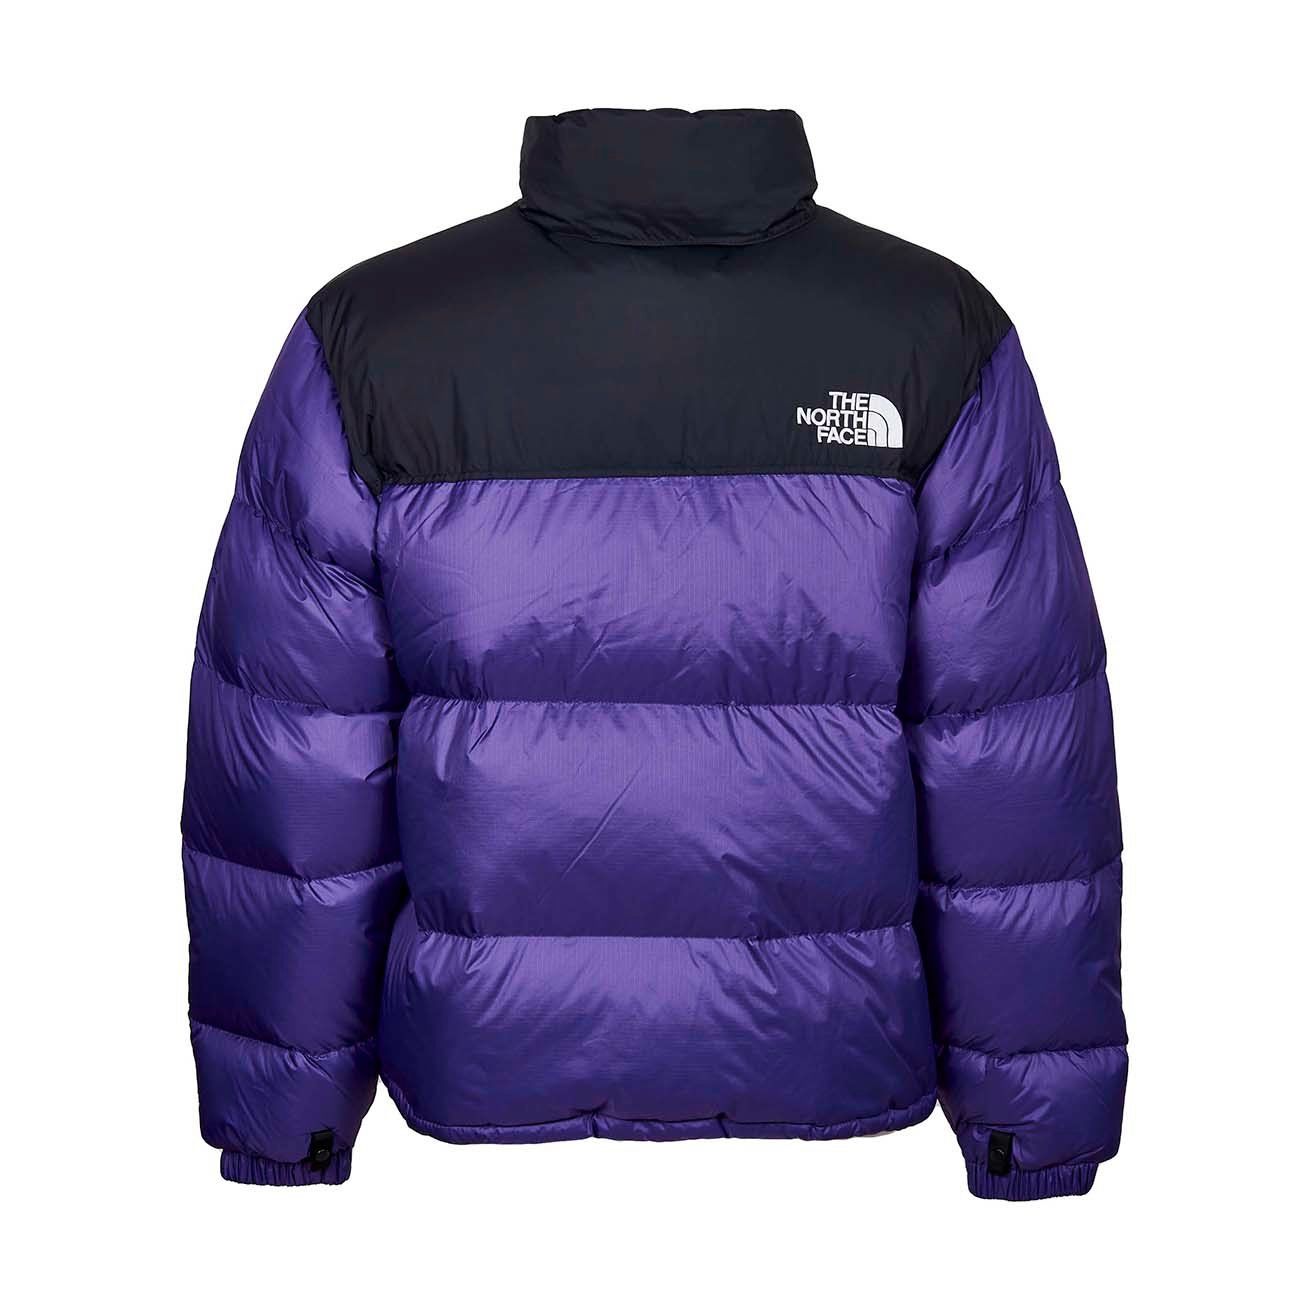 The North Face Jacket 1996 Retro Nuptse Man Purple Black Mascheroni Sportswear